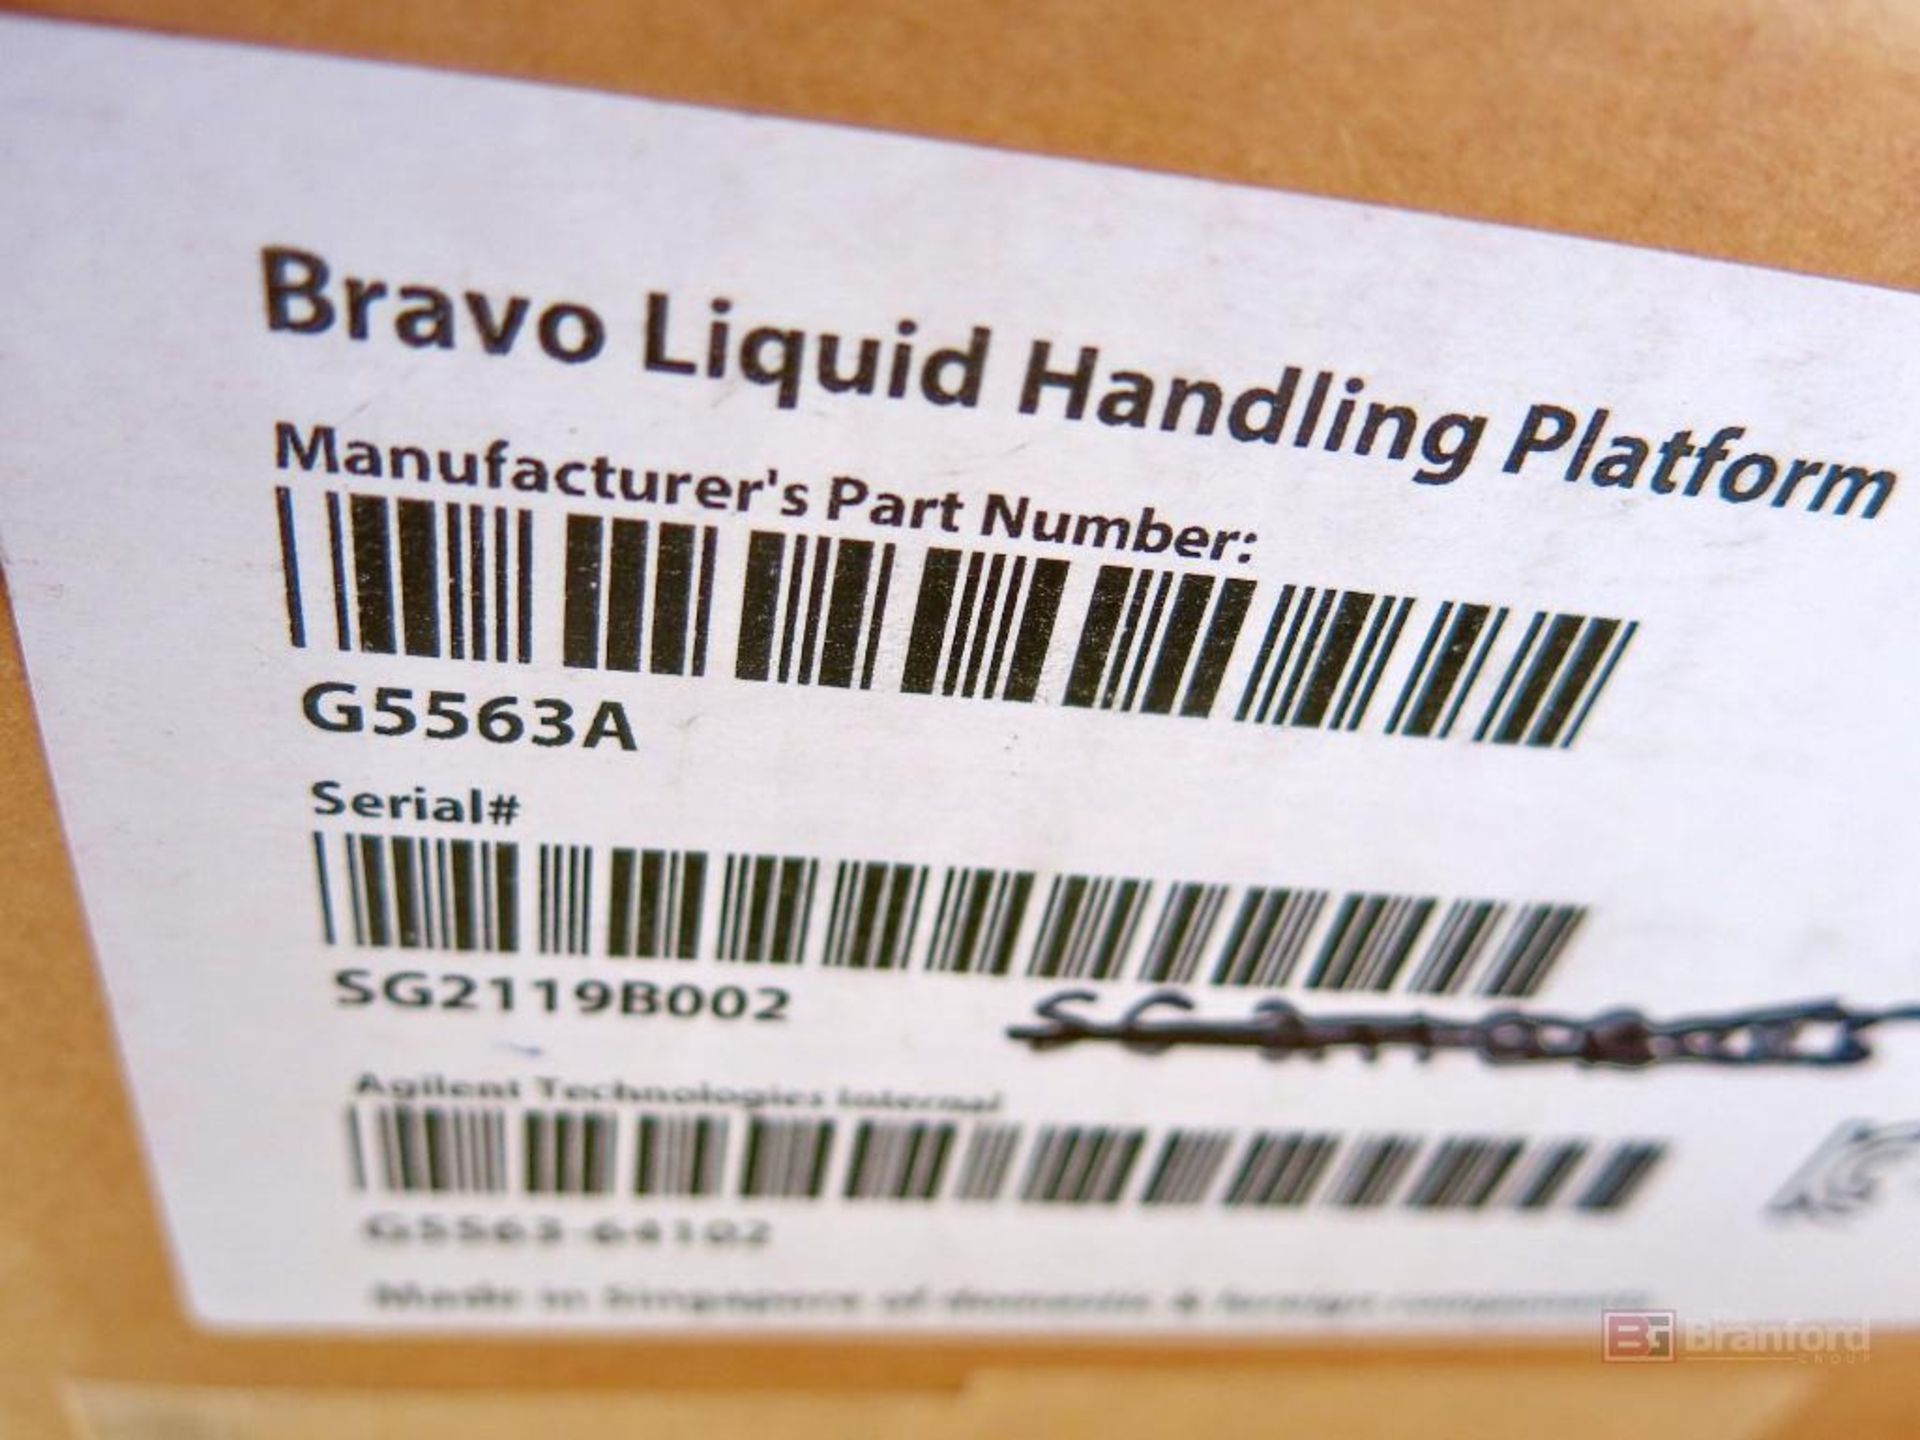 Agilent Technologies Bravo Liquid Handling Platform - Image 4 of 4